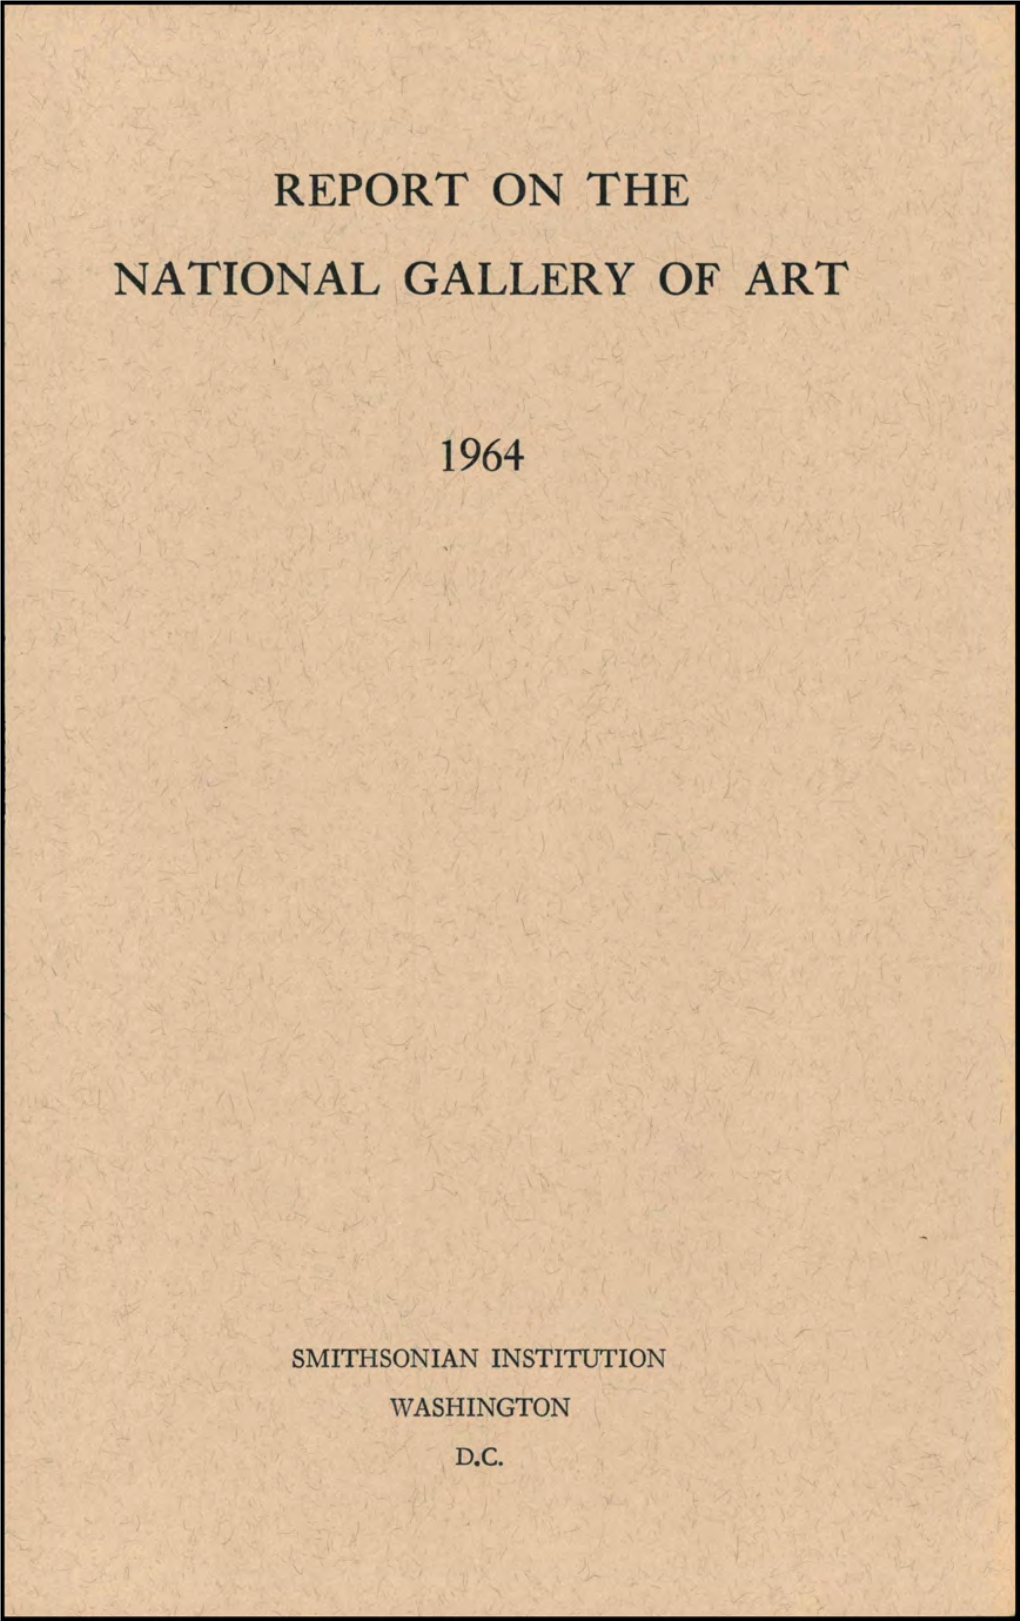 Annual Report 1964